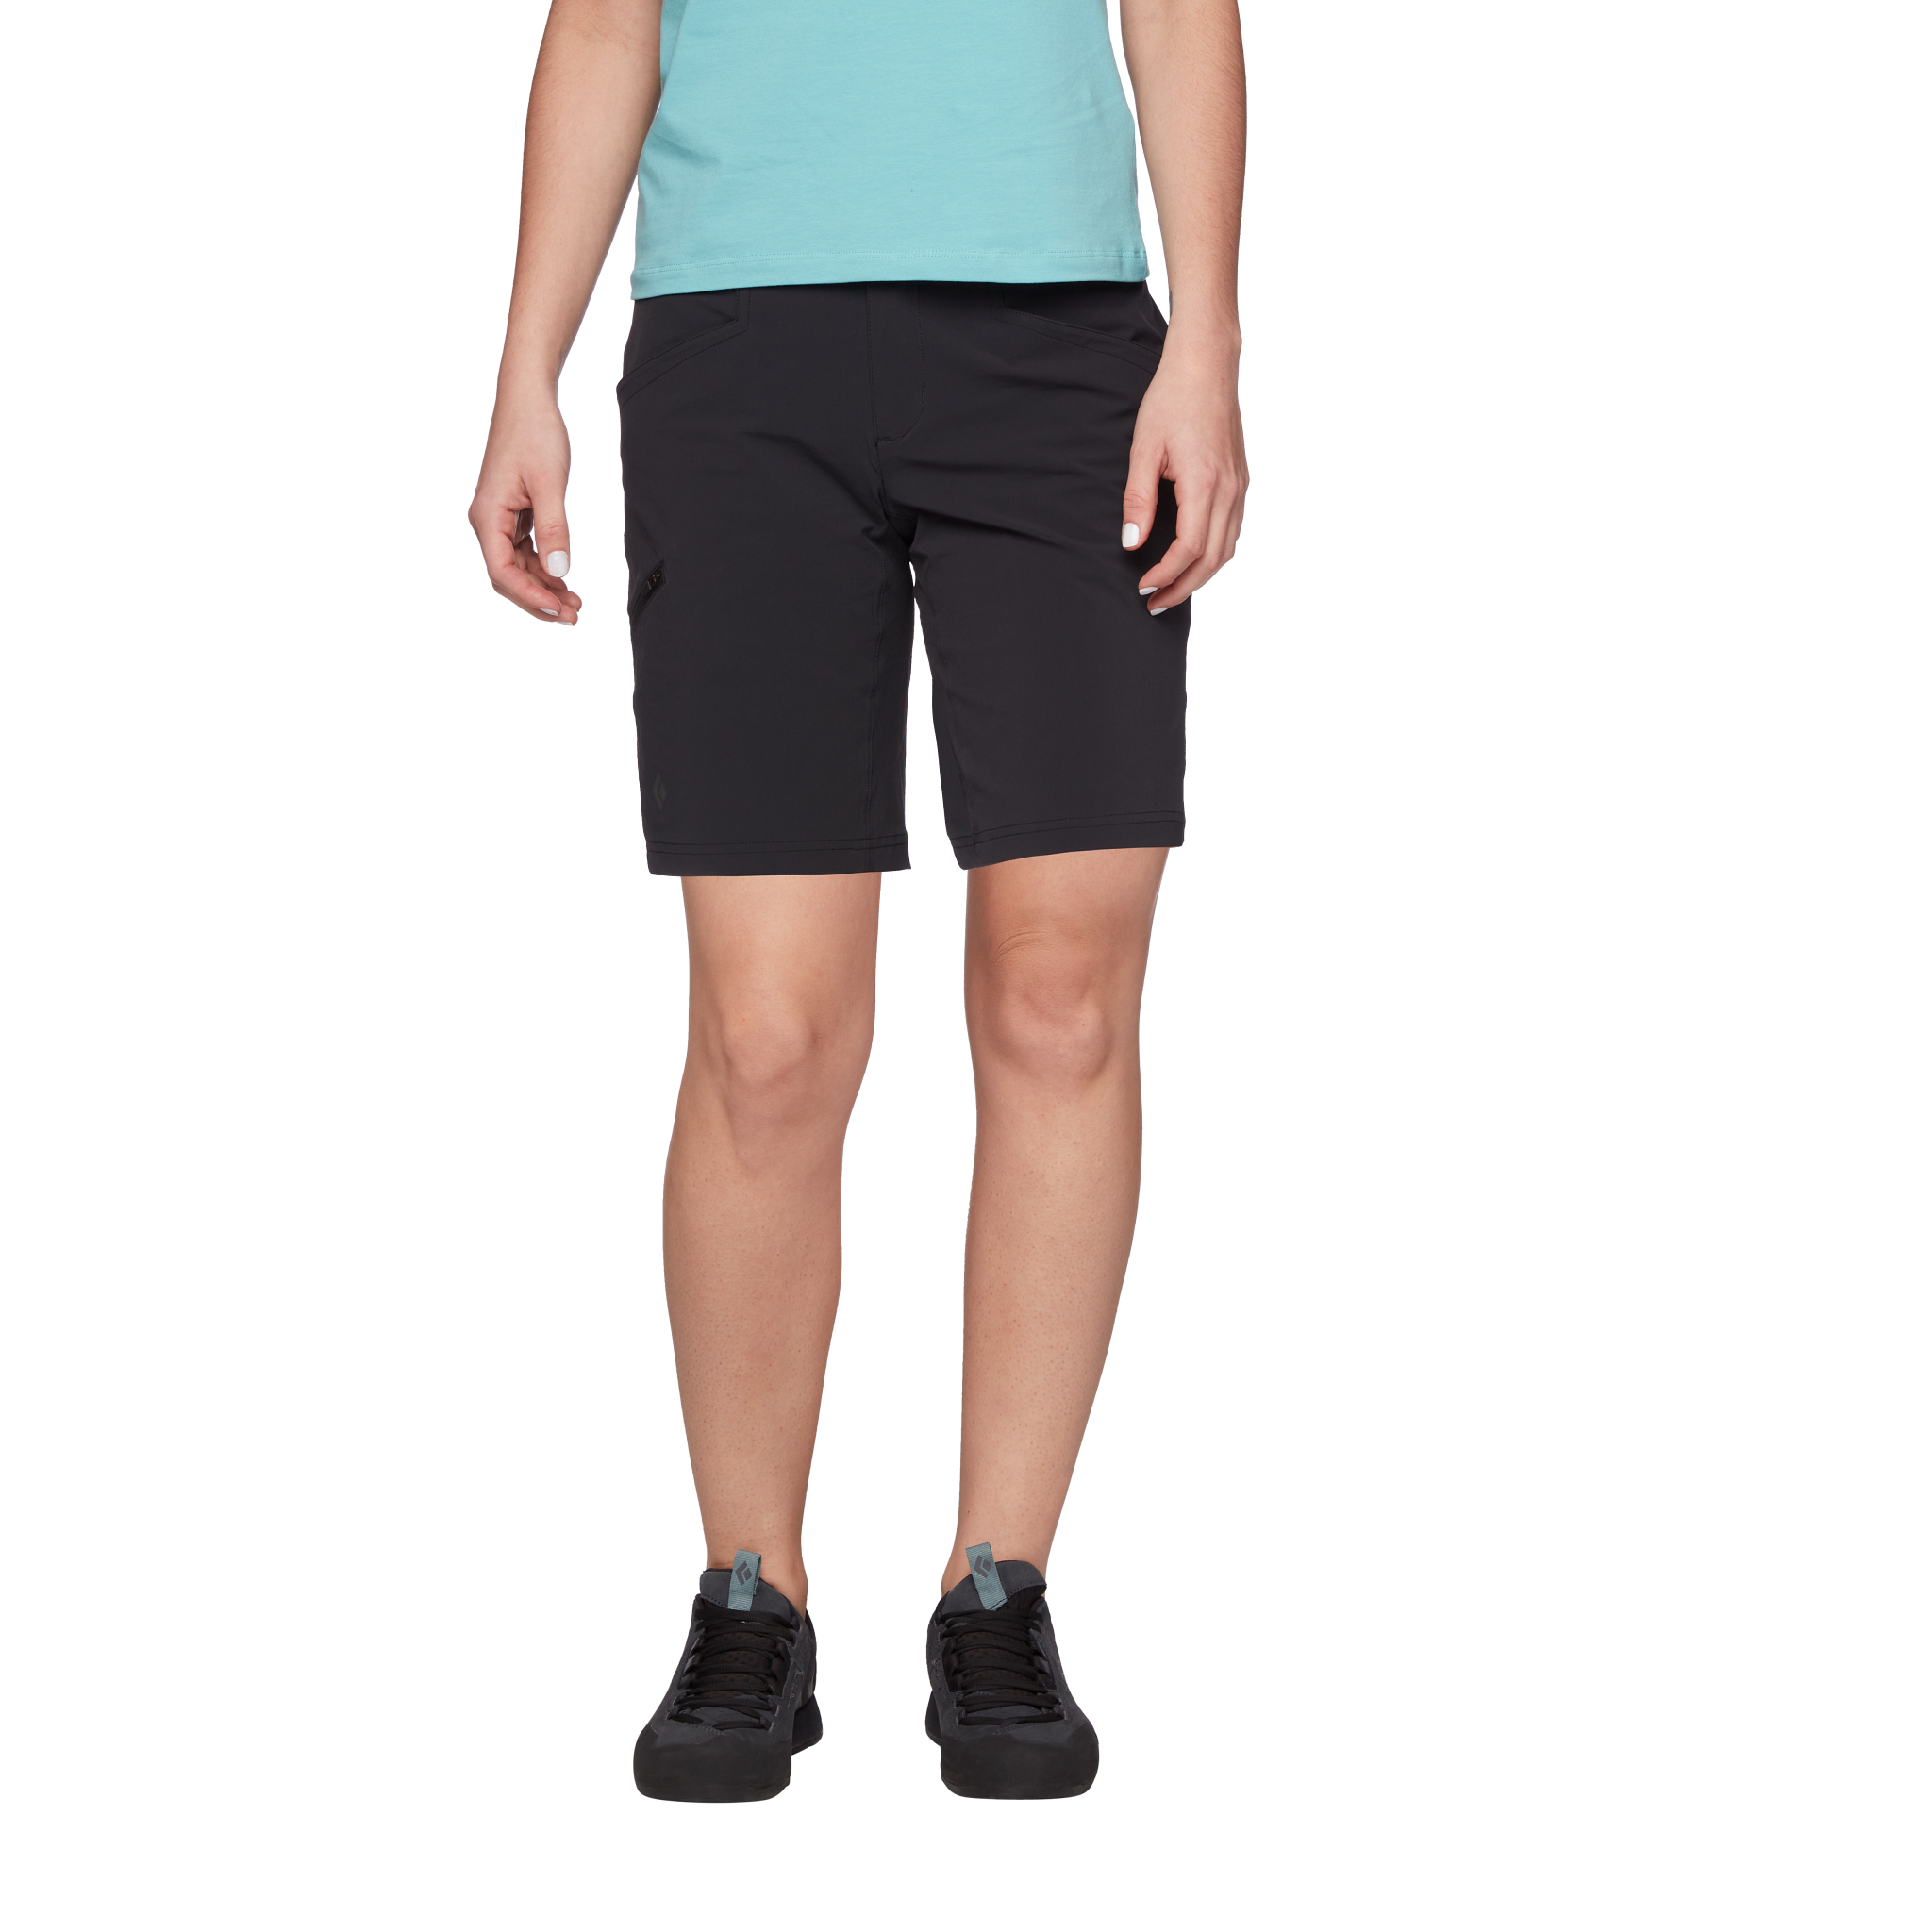 Black Diamond Equipment Women's Valley Shorts Size 12, in Black